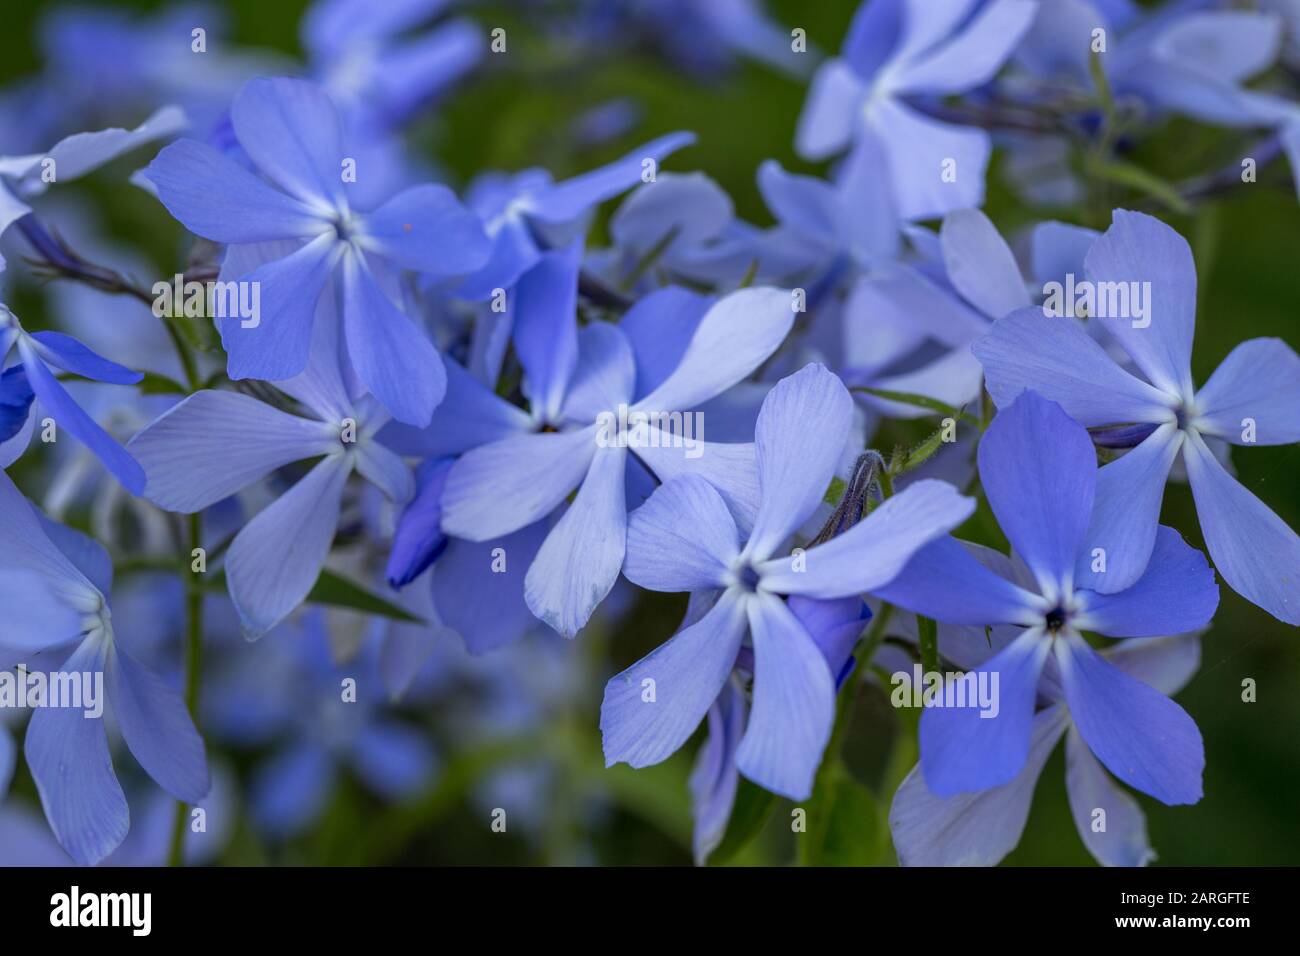 Phlox divaricata - wild sweet william - woodland phlox - wild blue phlox Stock Photo